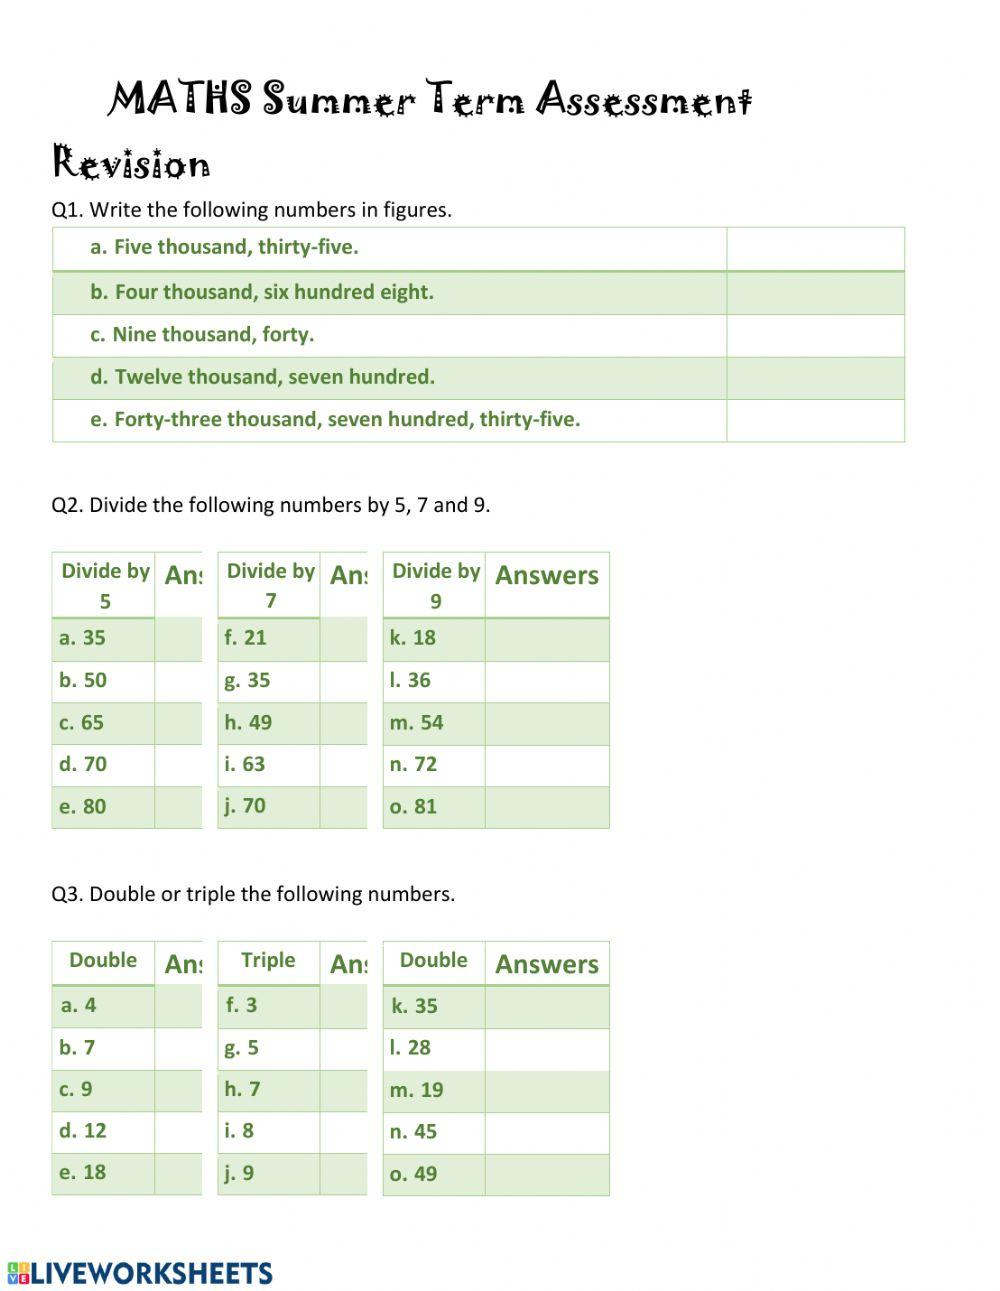 Maths Revision Part 1